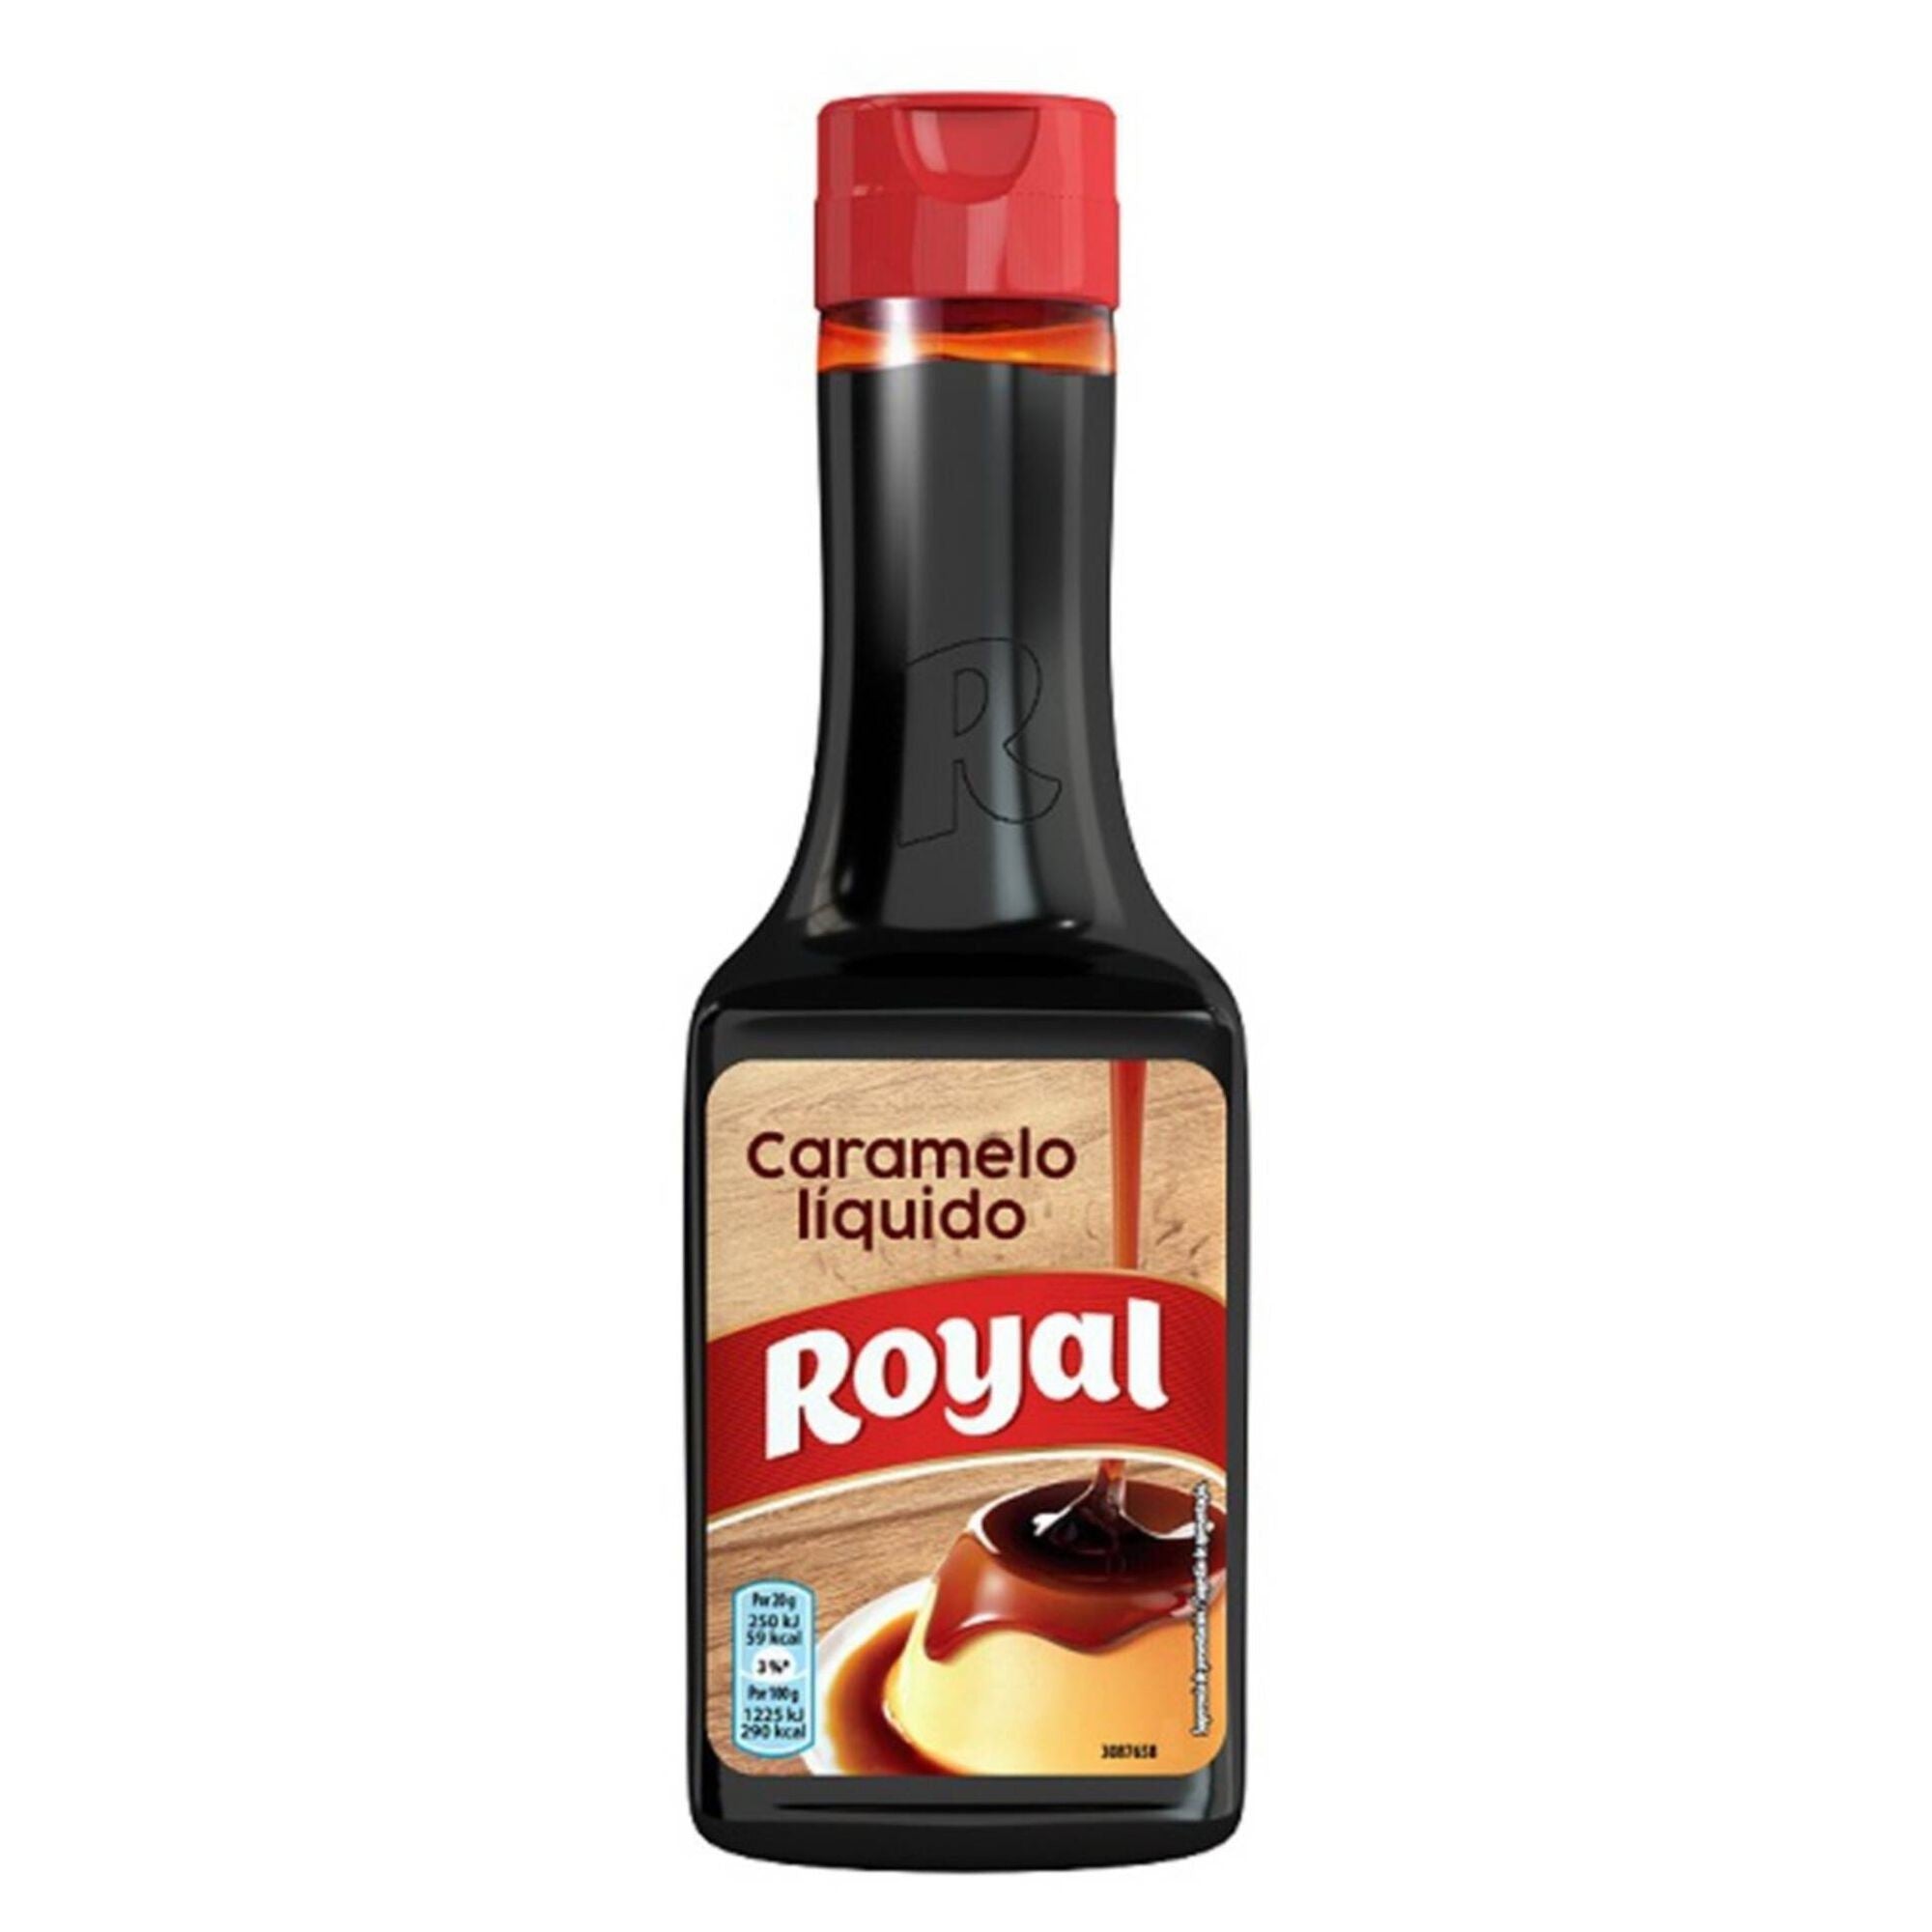 Liquid Caramel Royal emb. 400 grams